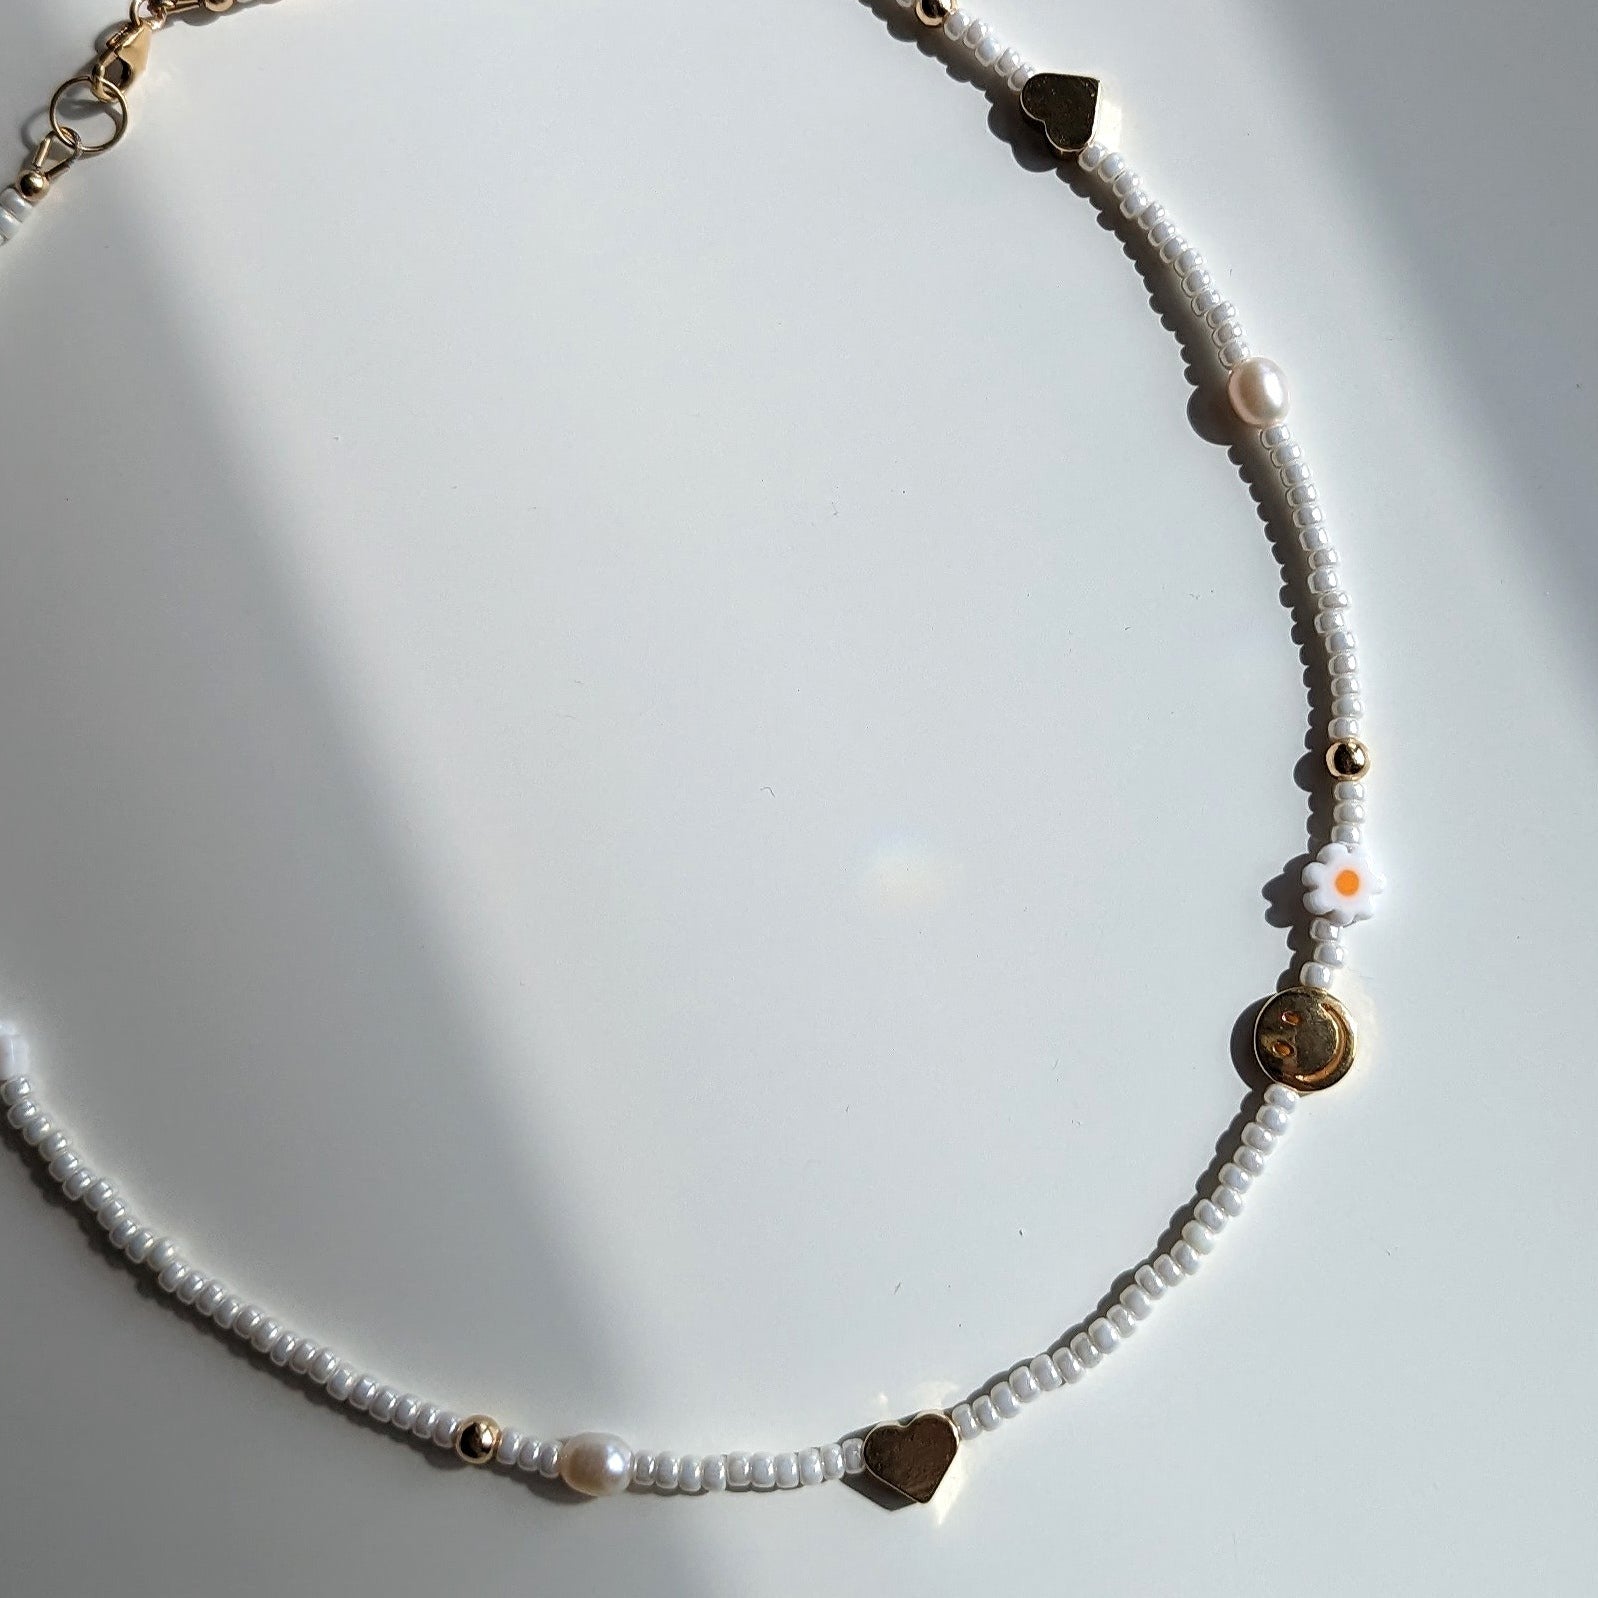 Boho Polymer Clay Beads Necklace Choker Beach Charm Jewelry Acces Lucky  Gift | eBay